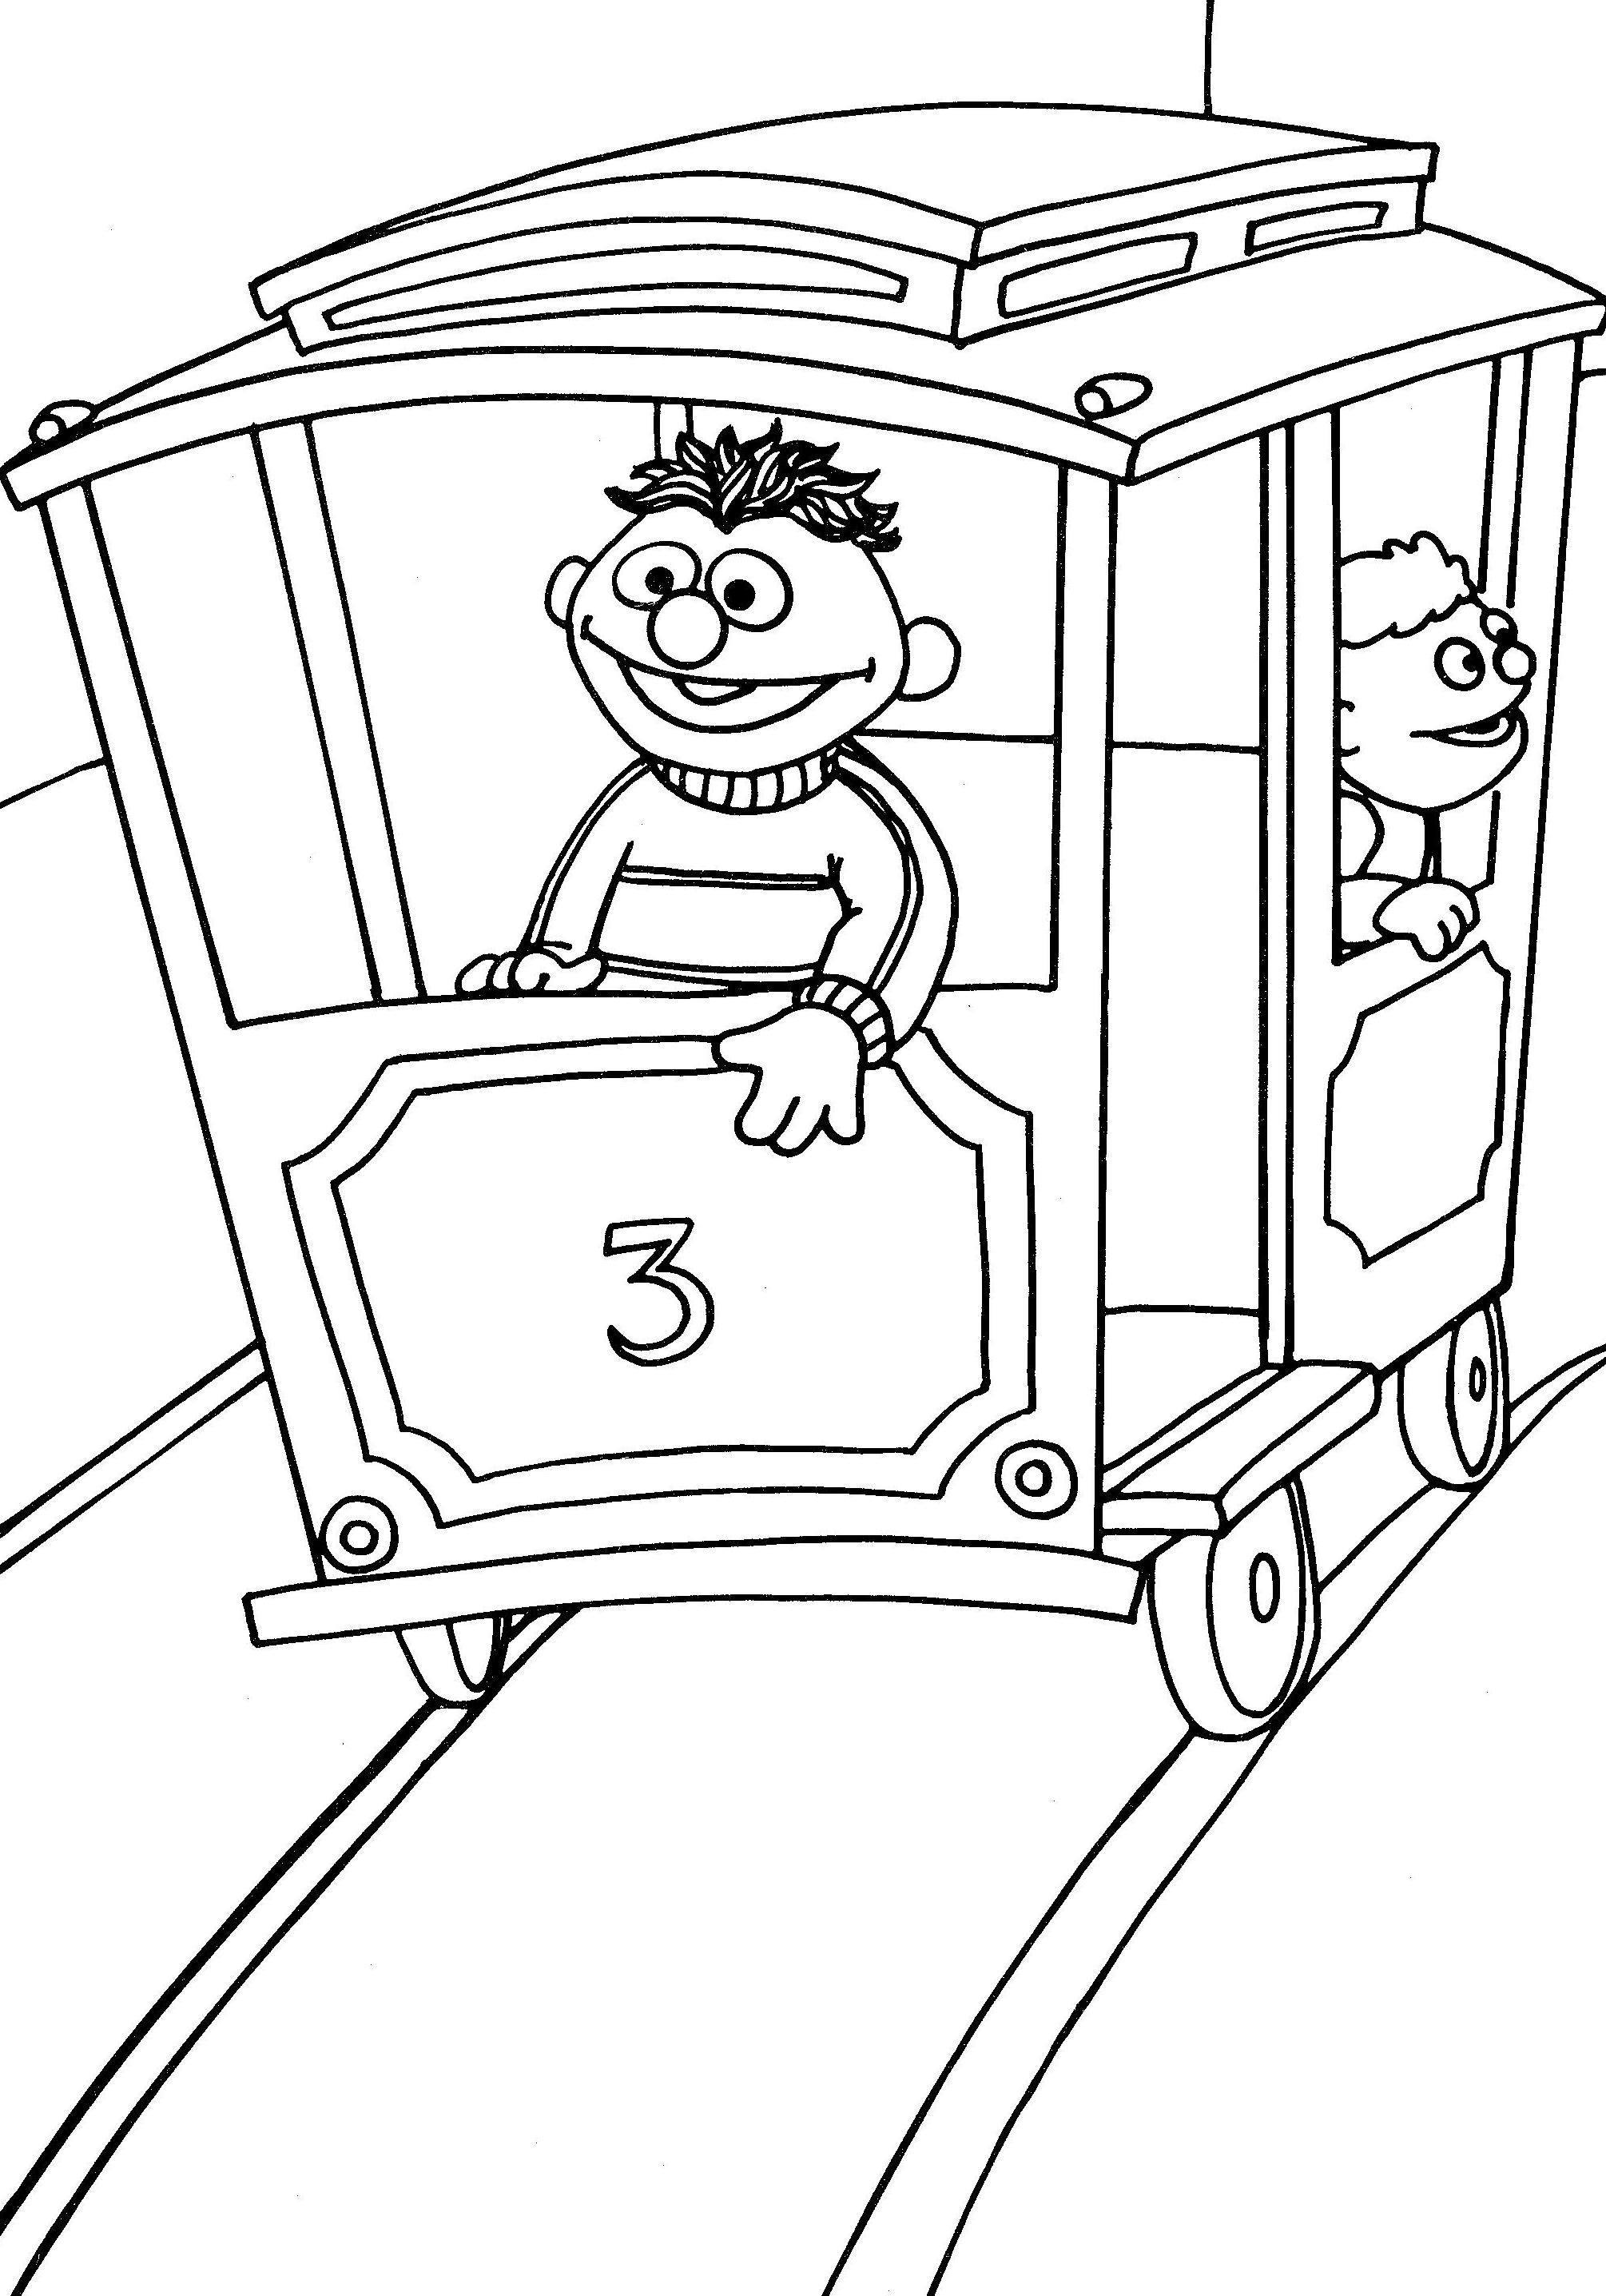 Página para colorir: muppets (desenhos animados) #31962 - Páginas para Colorir Imprimíveis Gratuitamente